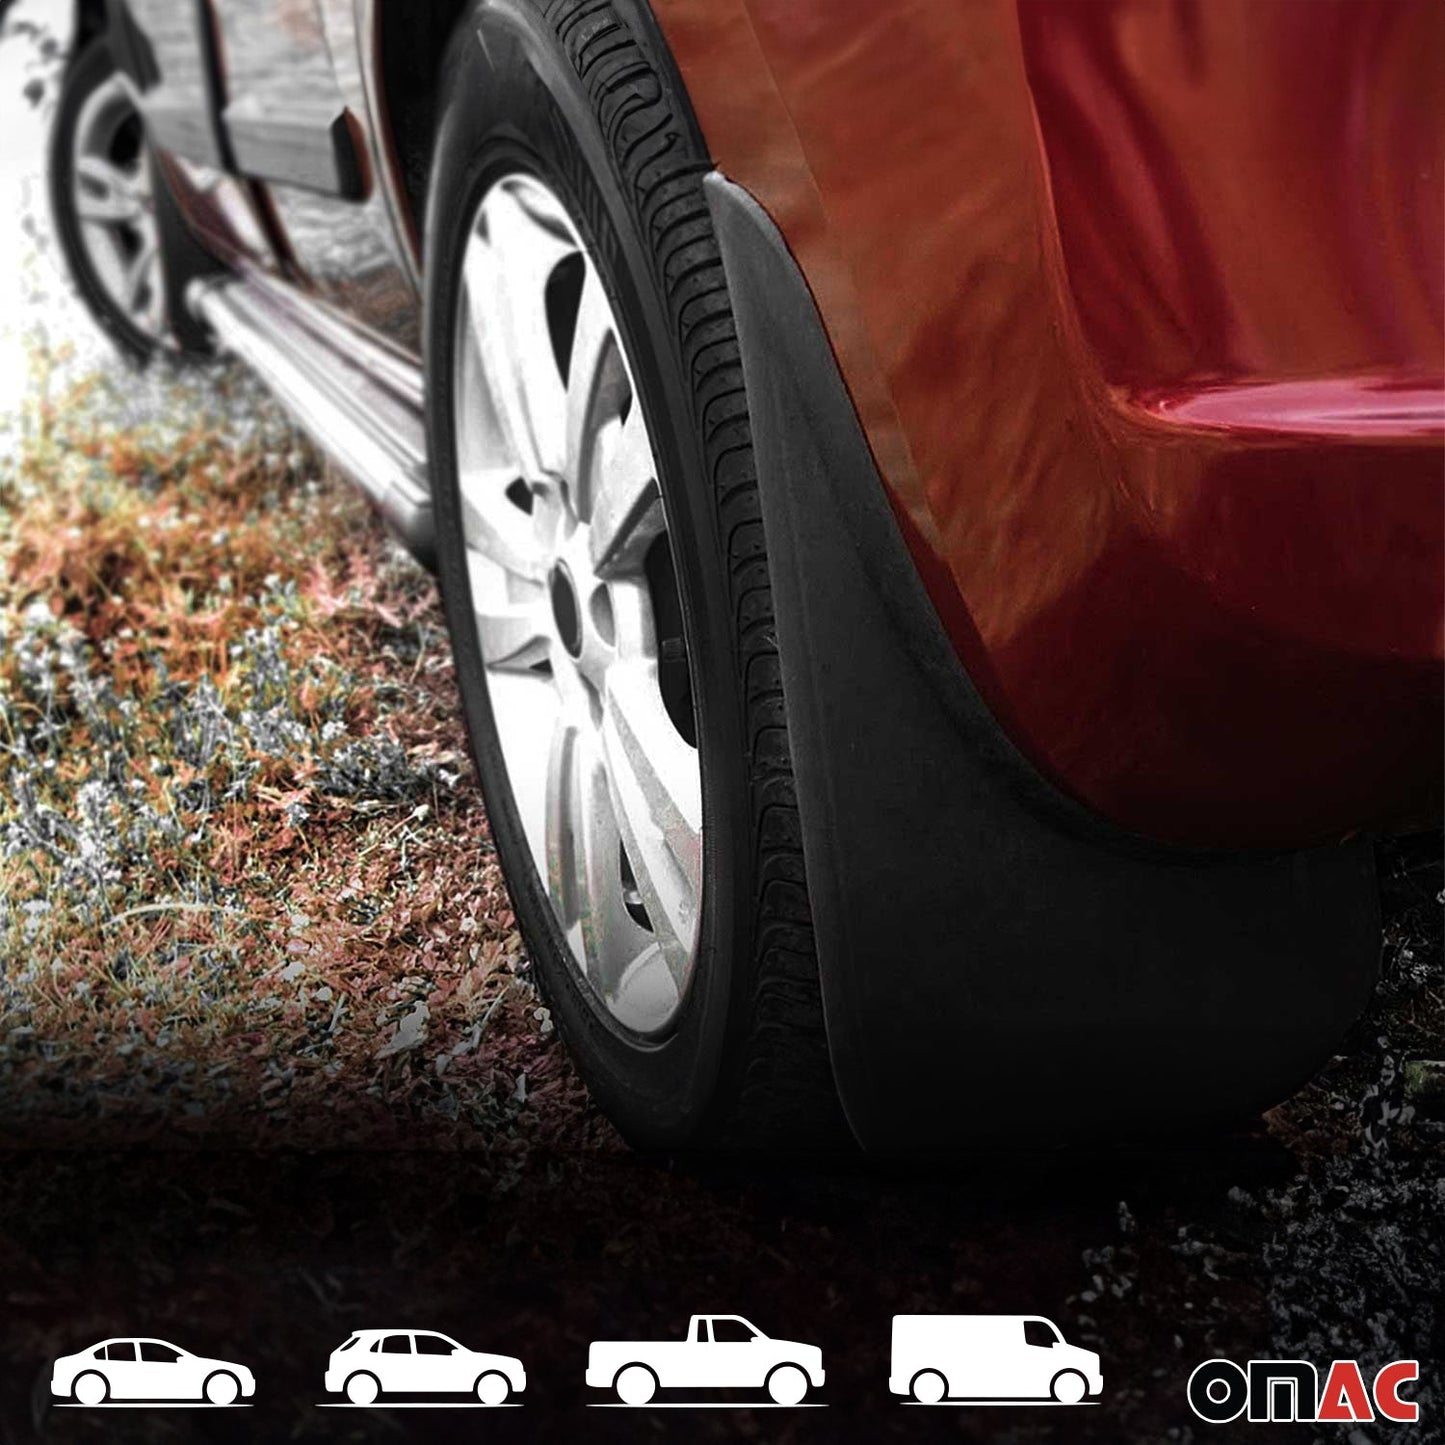 OMAC Mud Guards Splash Mud Flaps for Mazda CX-5 2013-2016 Black 4 Pcs 4692MFSET1